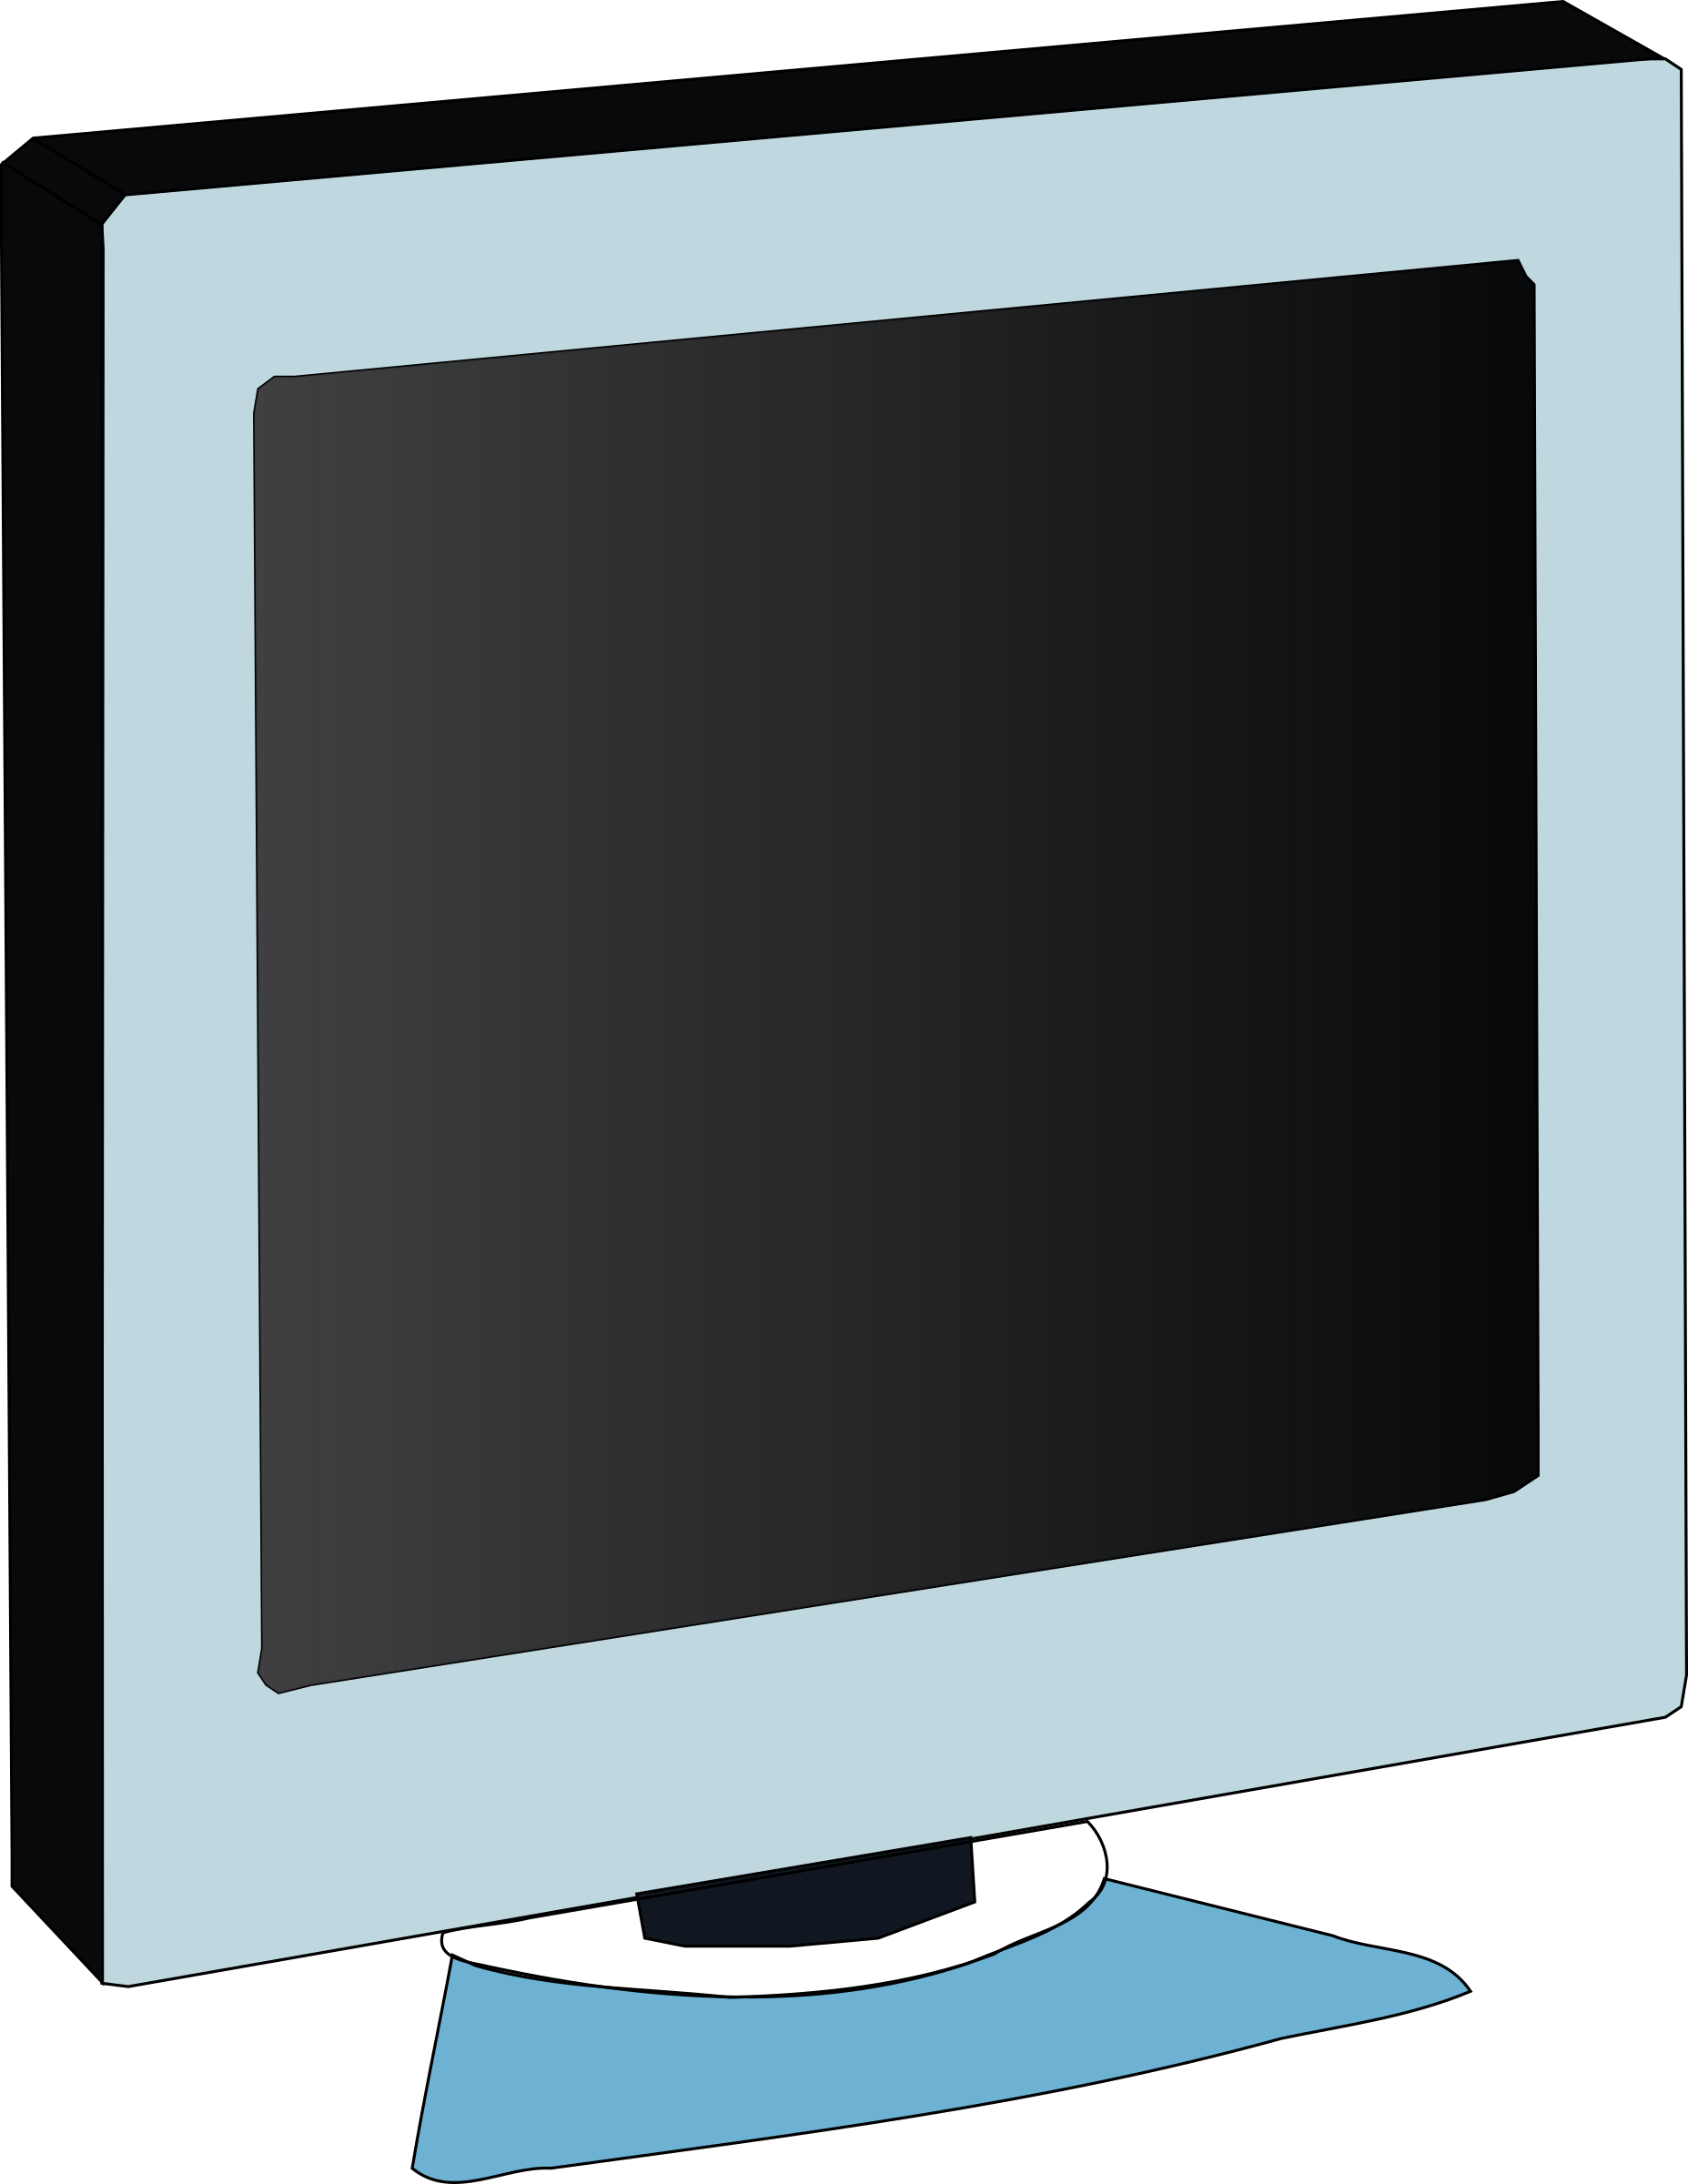 Modern Computer Monitor Illustration